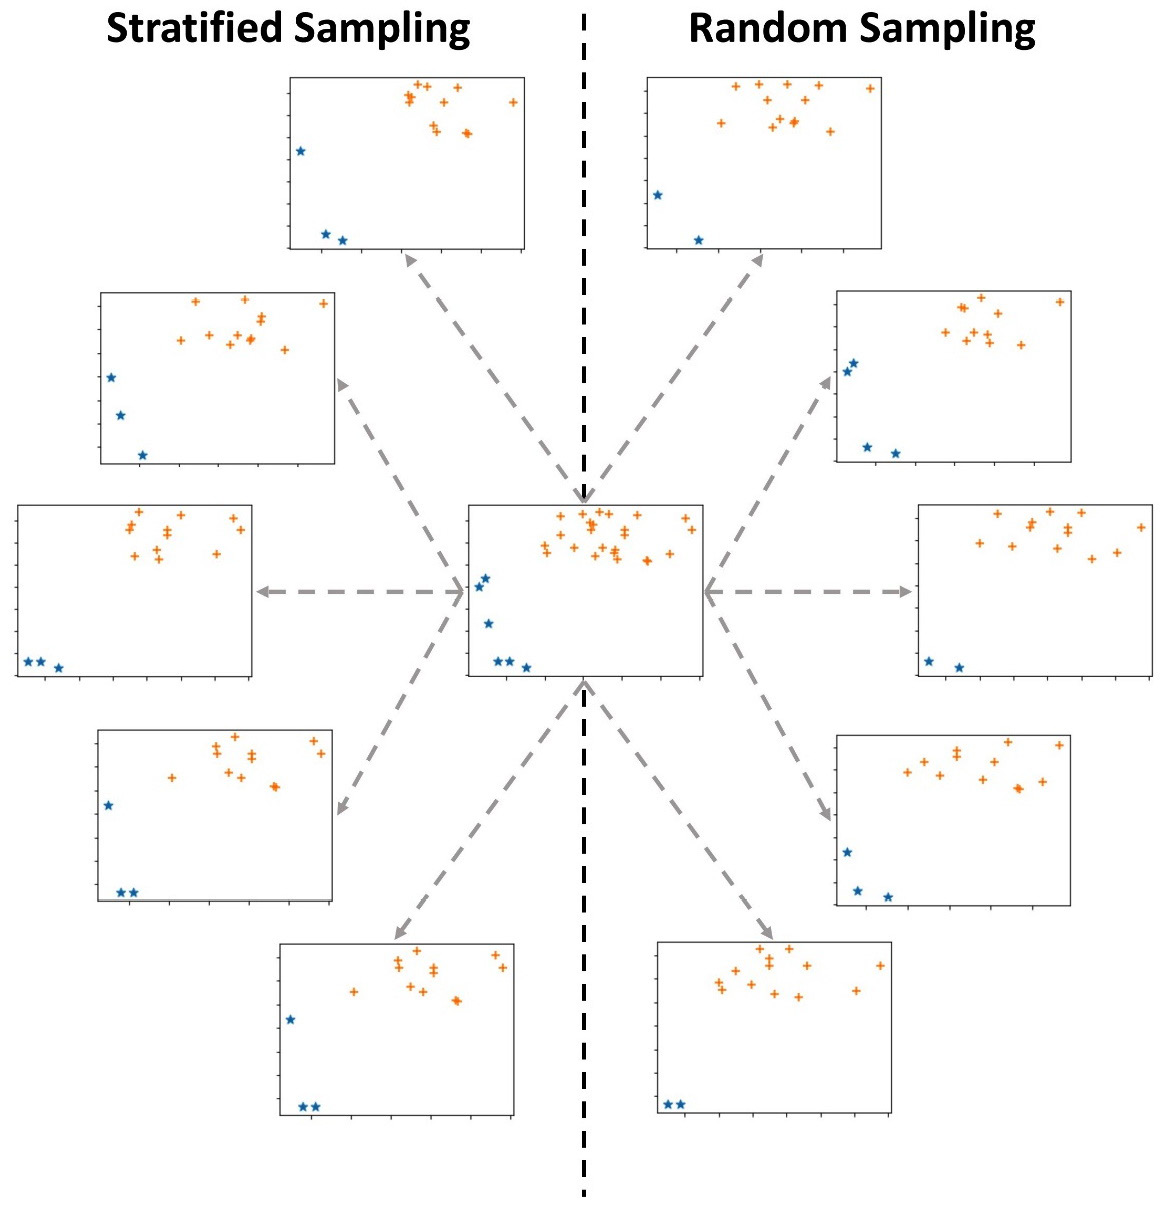 Figure 13.4 – Stratified sampling versus random sampling
